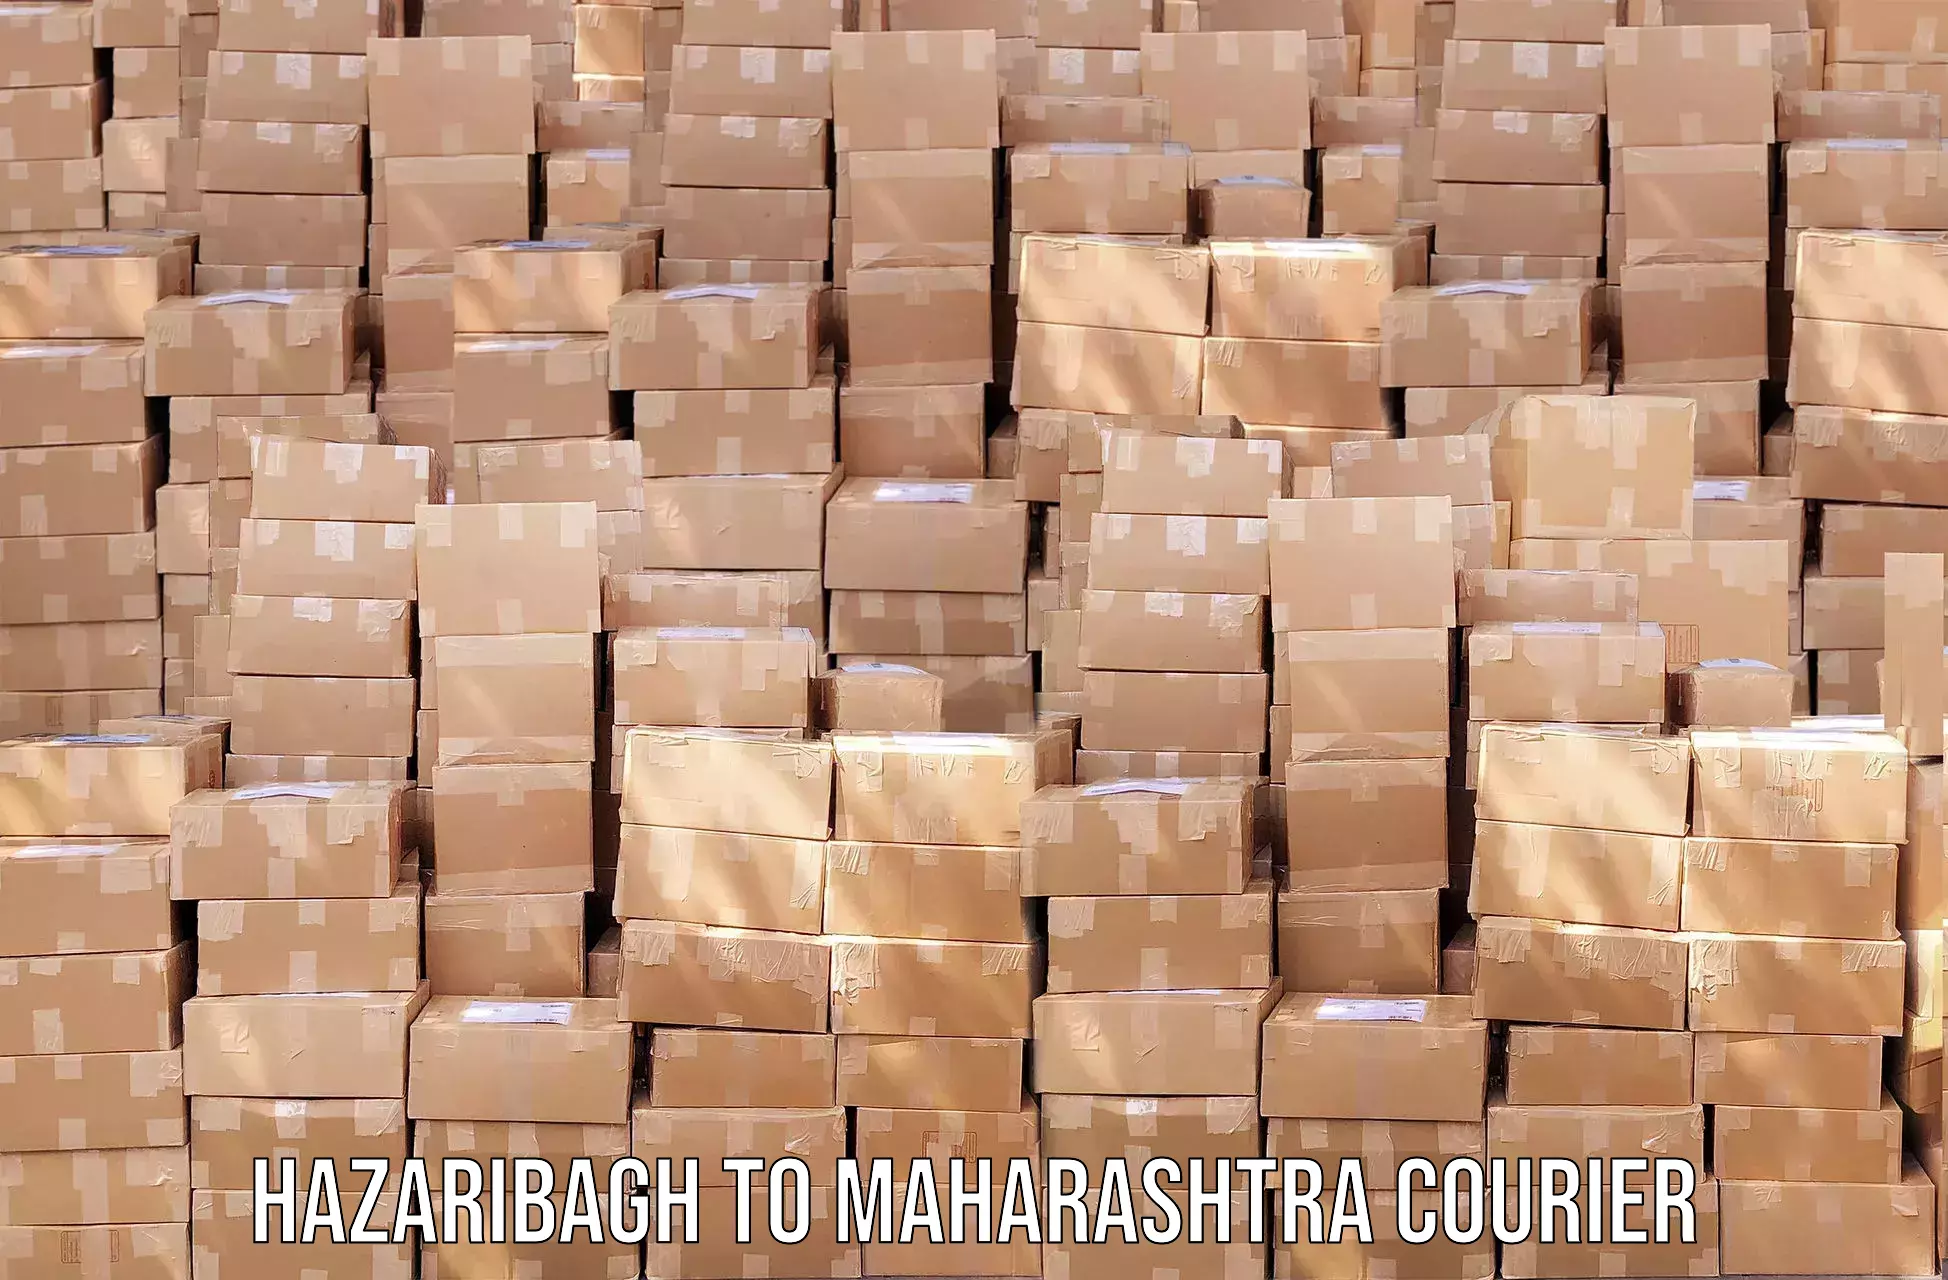 Efficient order fulfillment Hazaribagh to Solapur